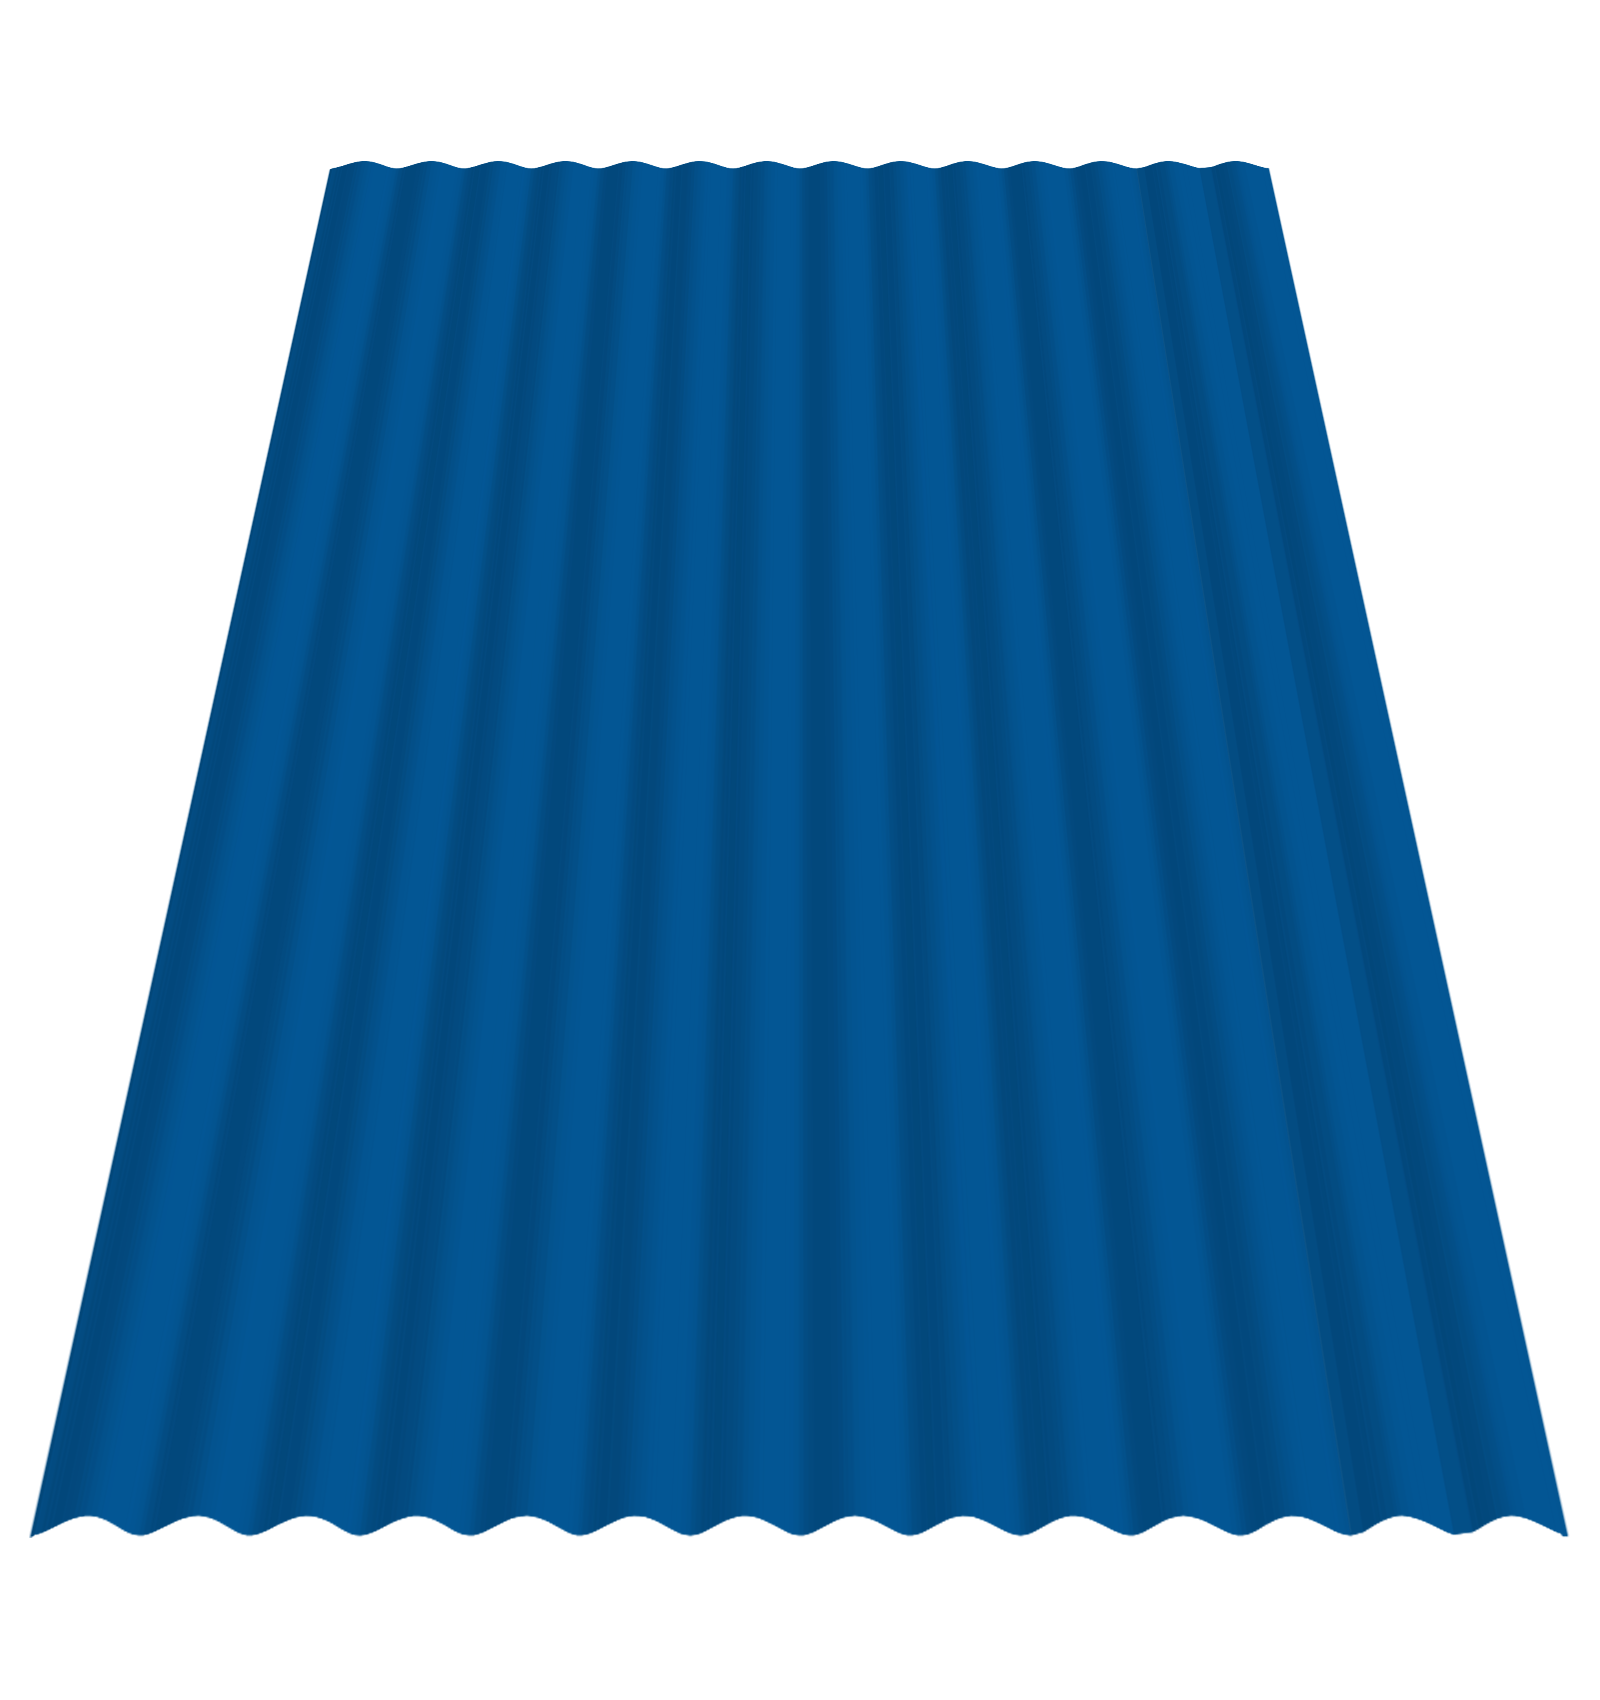 Westman Steel - Cladding - 1/2” CORRUGATED blue print